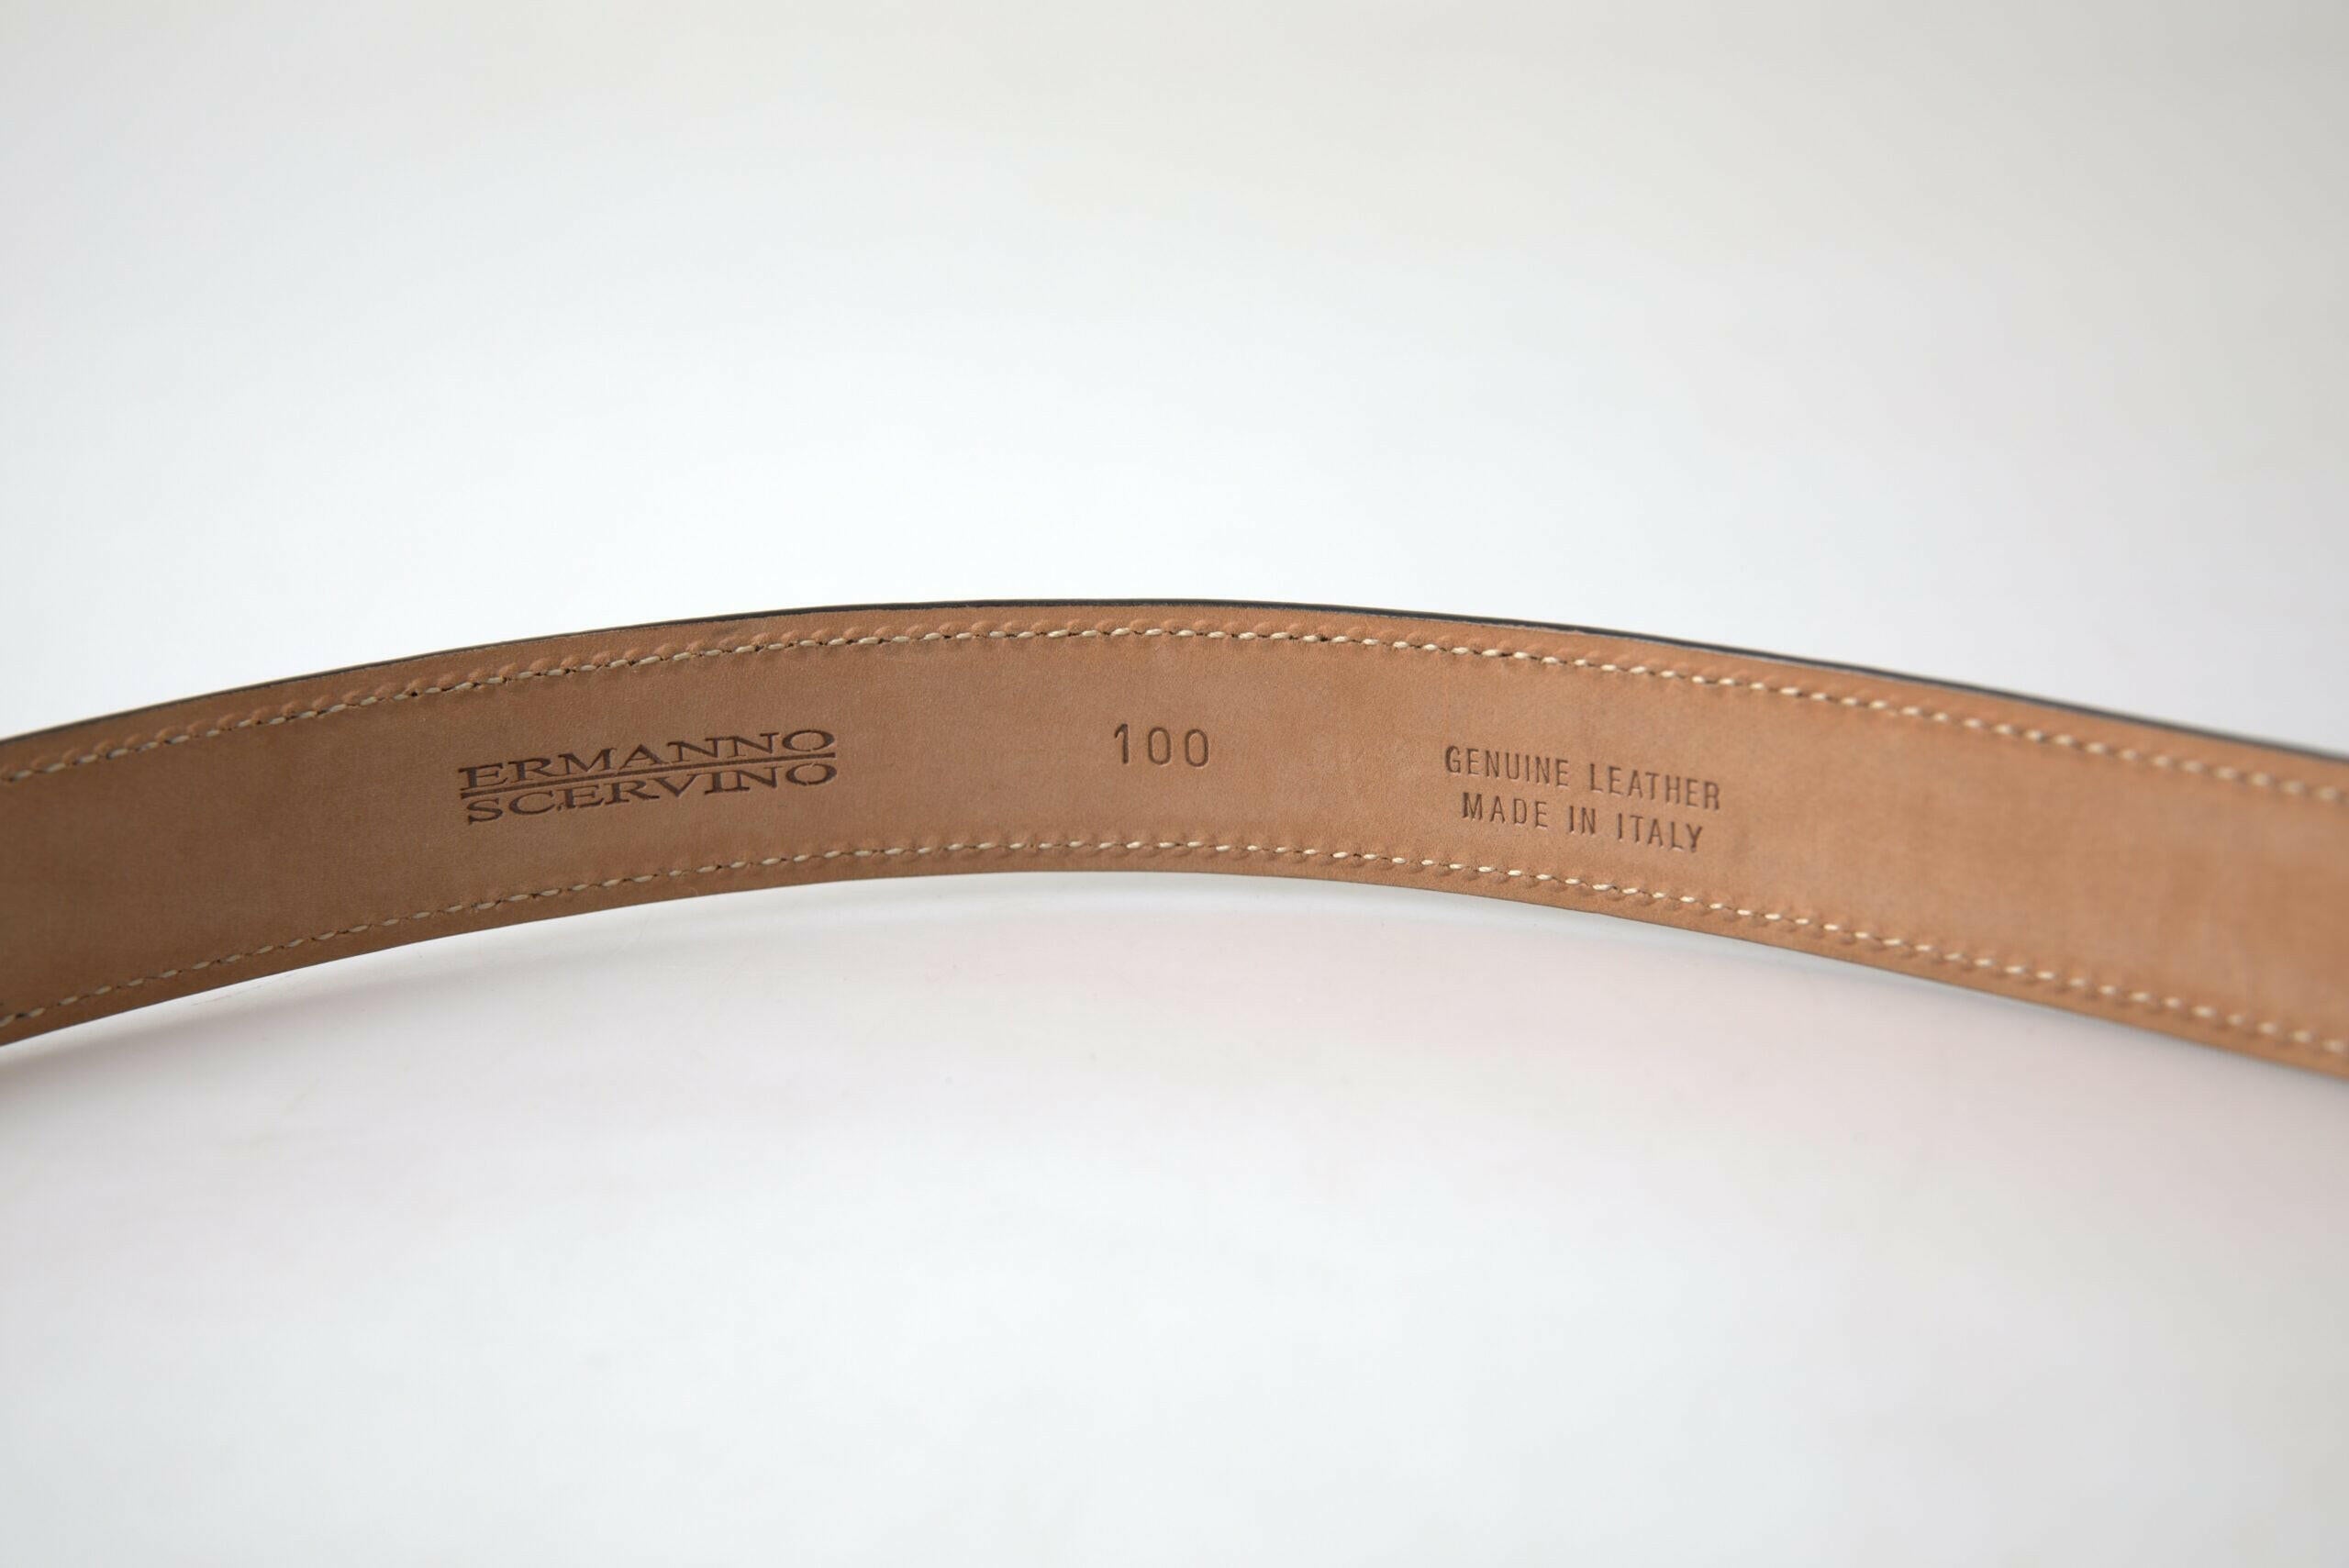 Ermanno Scervino Black Leather Metal Buckle Cintura Belt - GENUINE AUTHENTIC BRAND LLC  